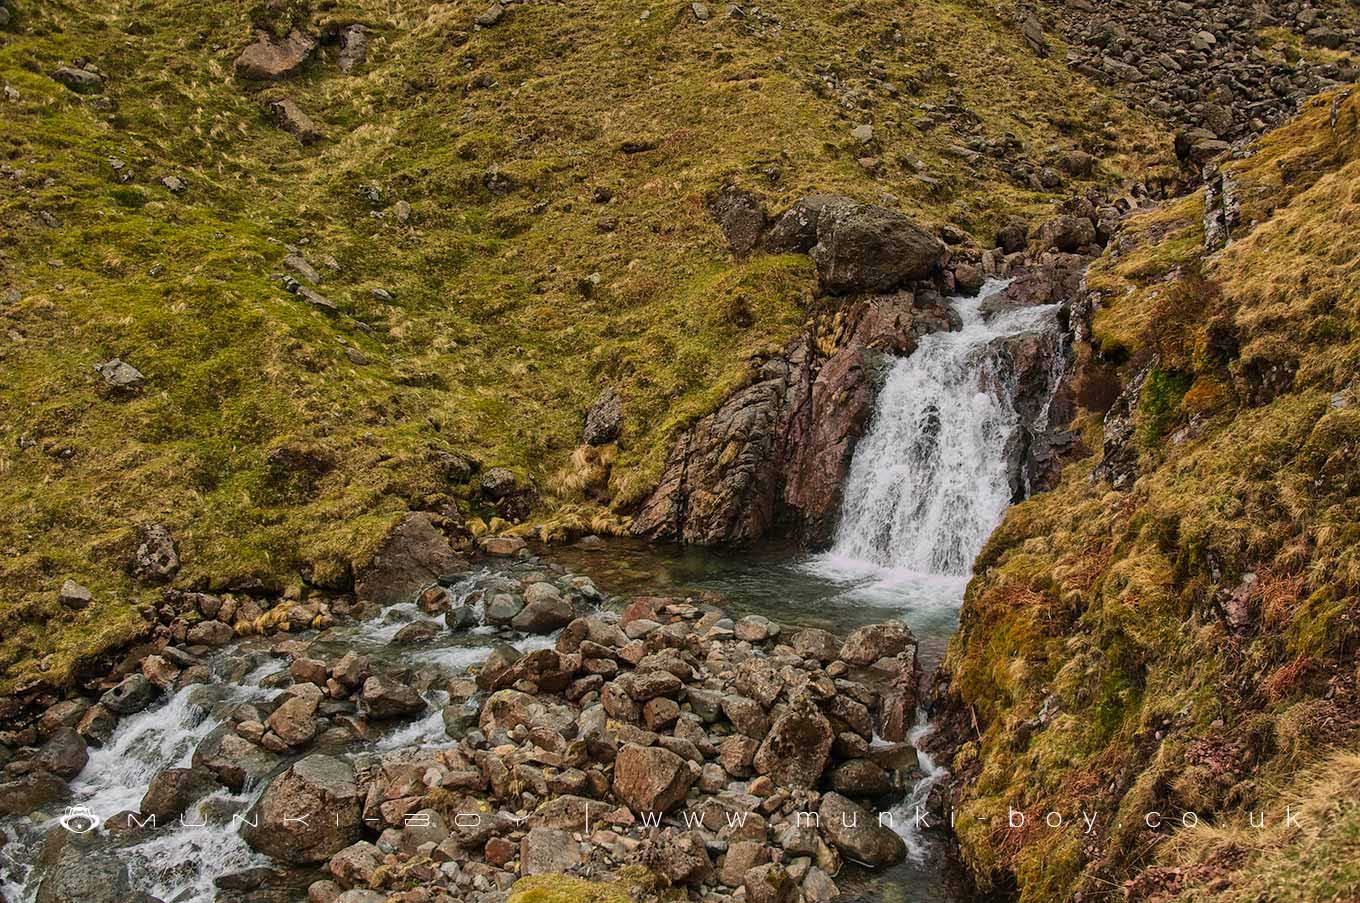 Waterfalls in Styhead Gill